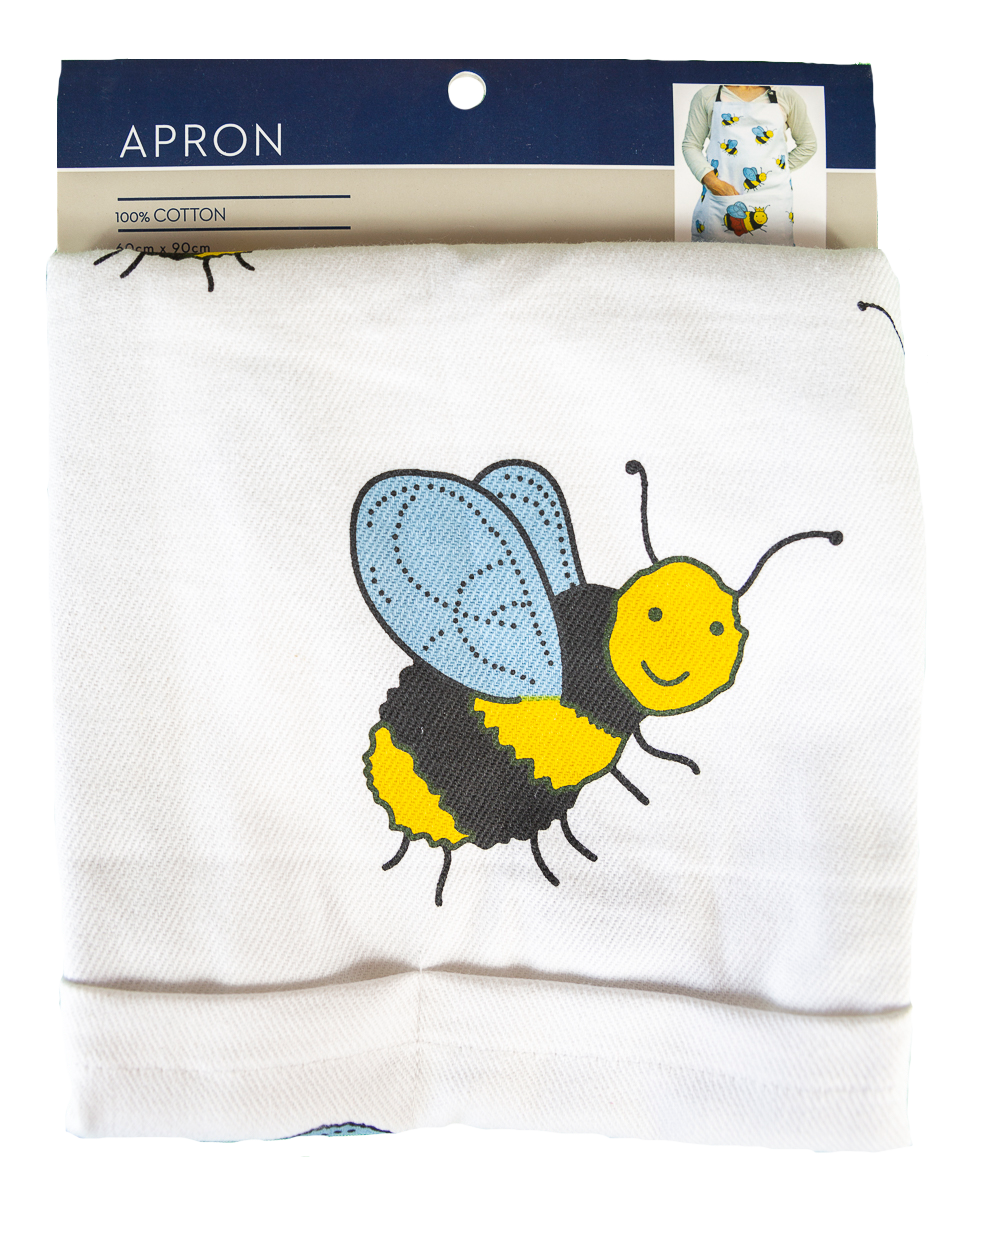 Apron (Heavy Drill) - Queen Bee